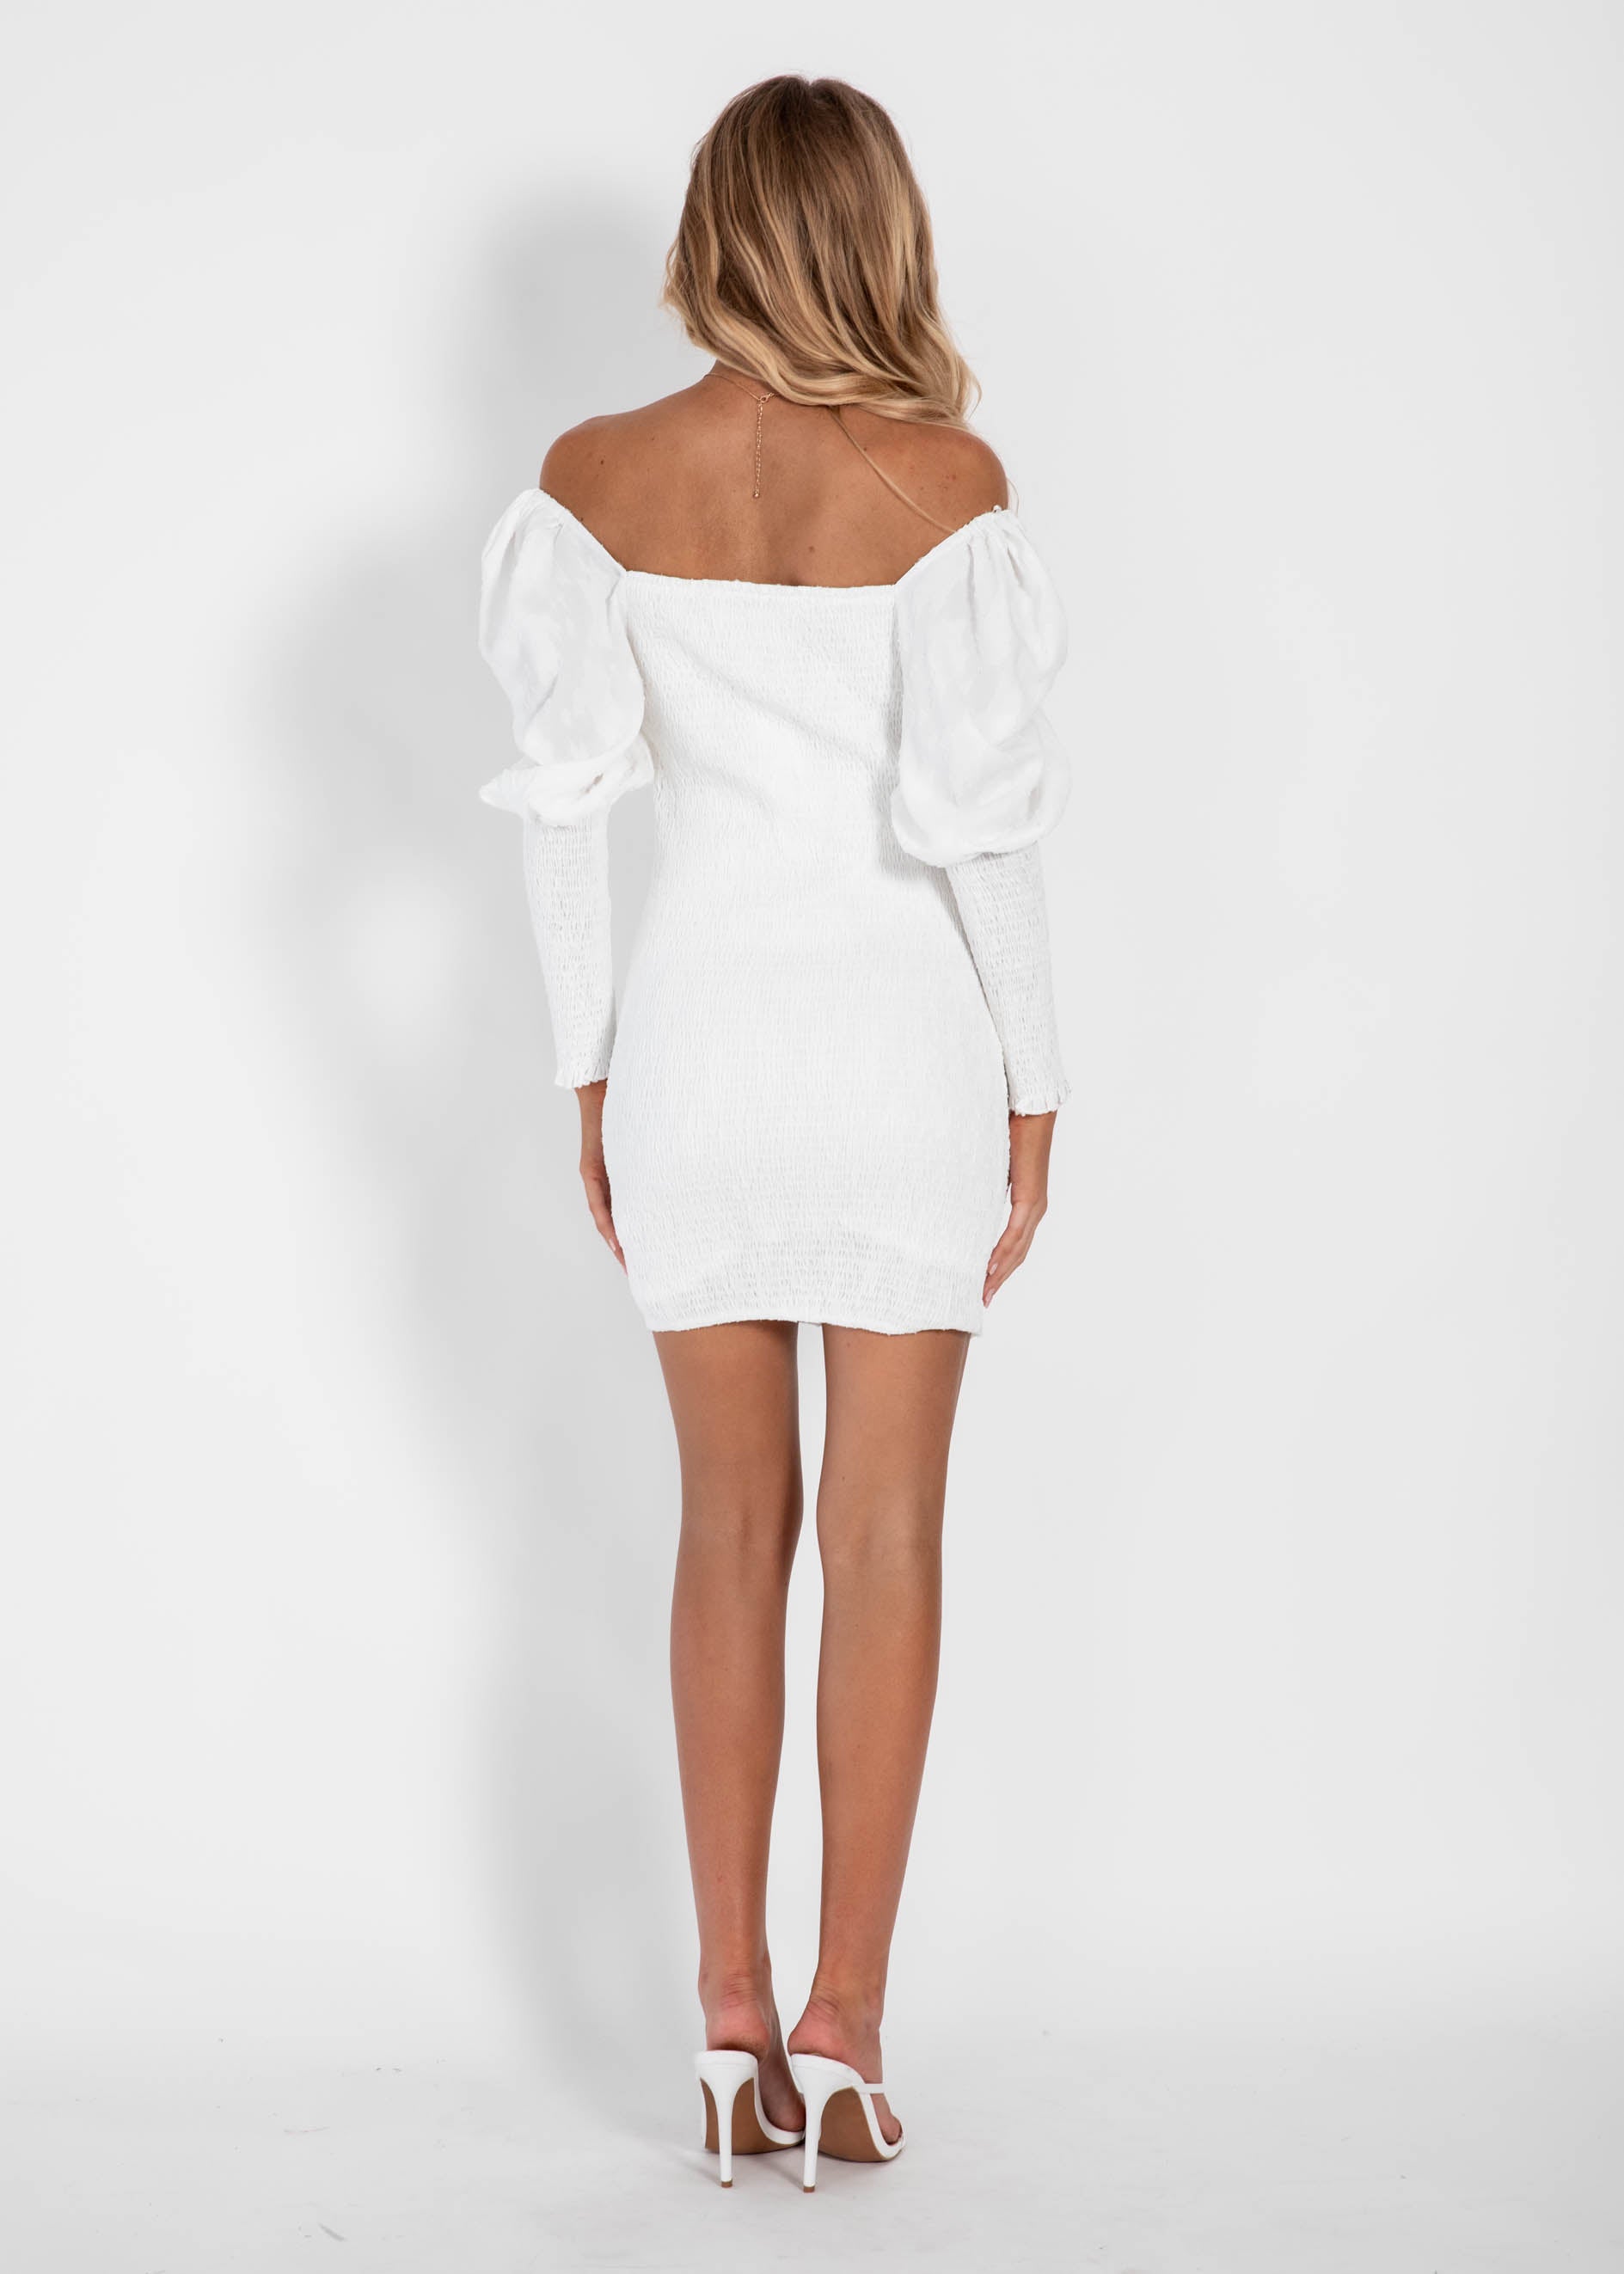 The Charm Dress - White